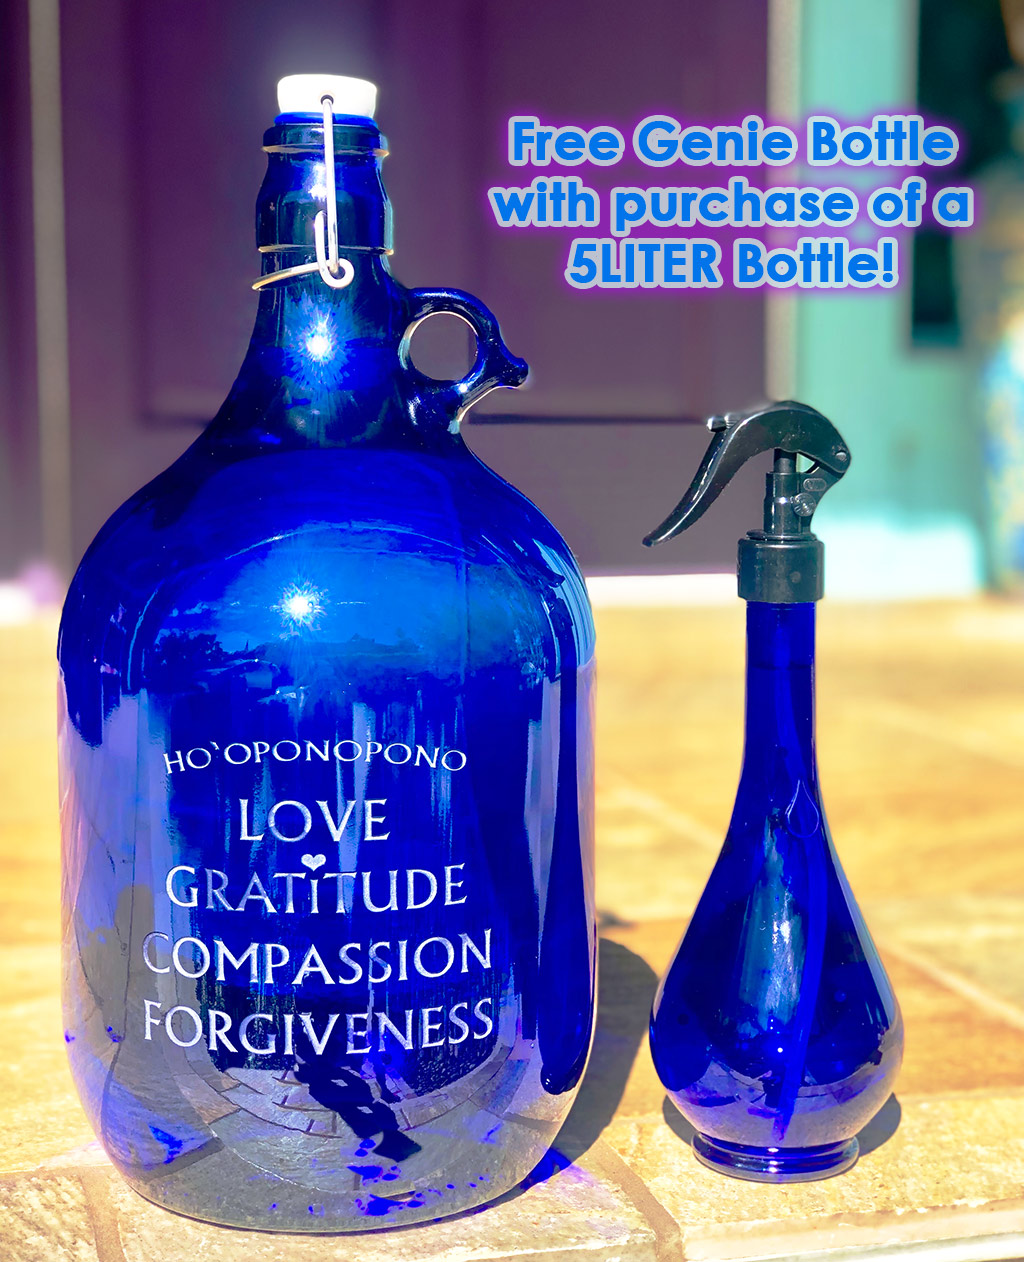 http://bluebottlelove.com/wp-content/uploads/2017/03/5-liter-free-genie-bottle-blue-bottle.jpg